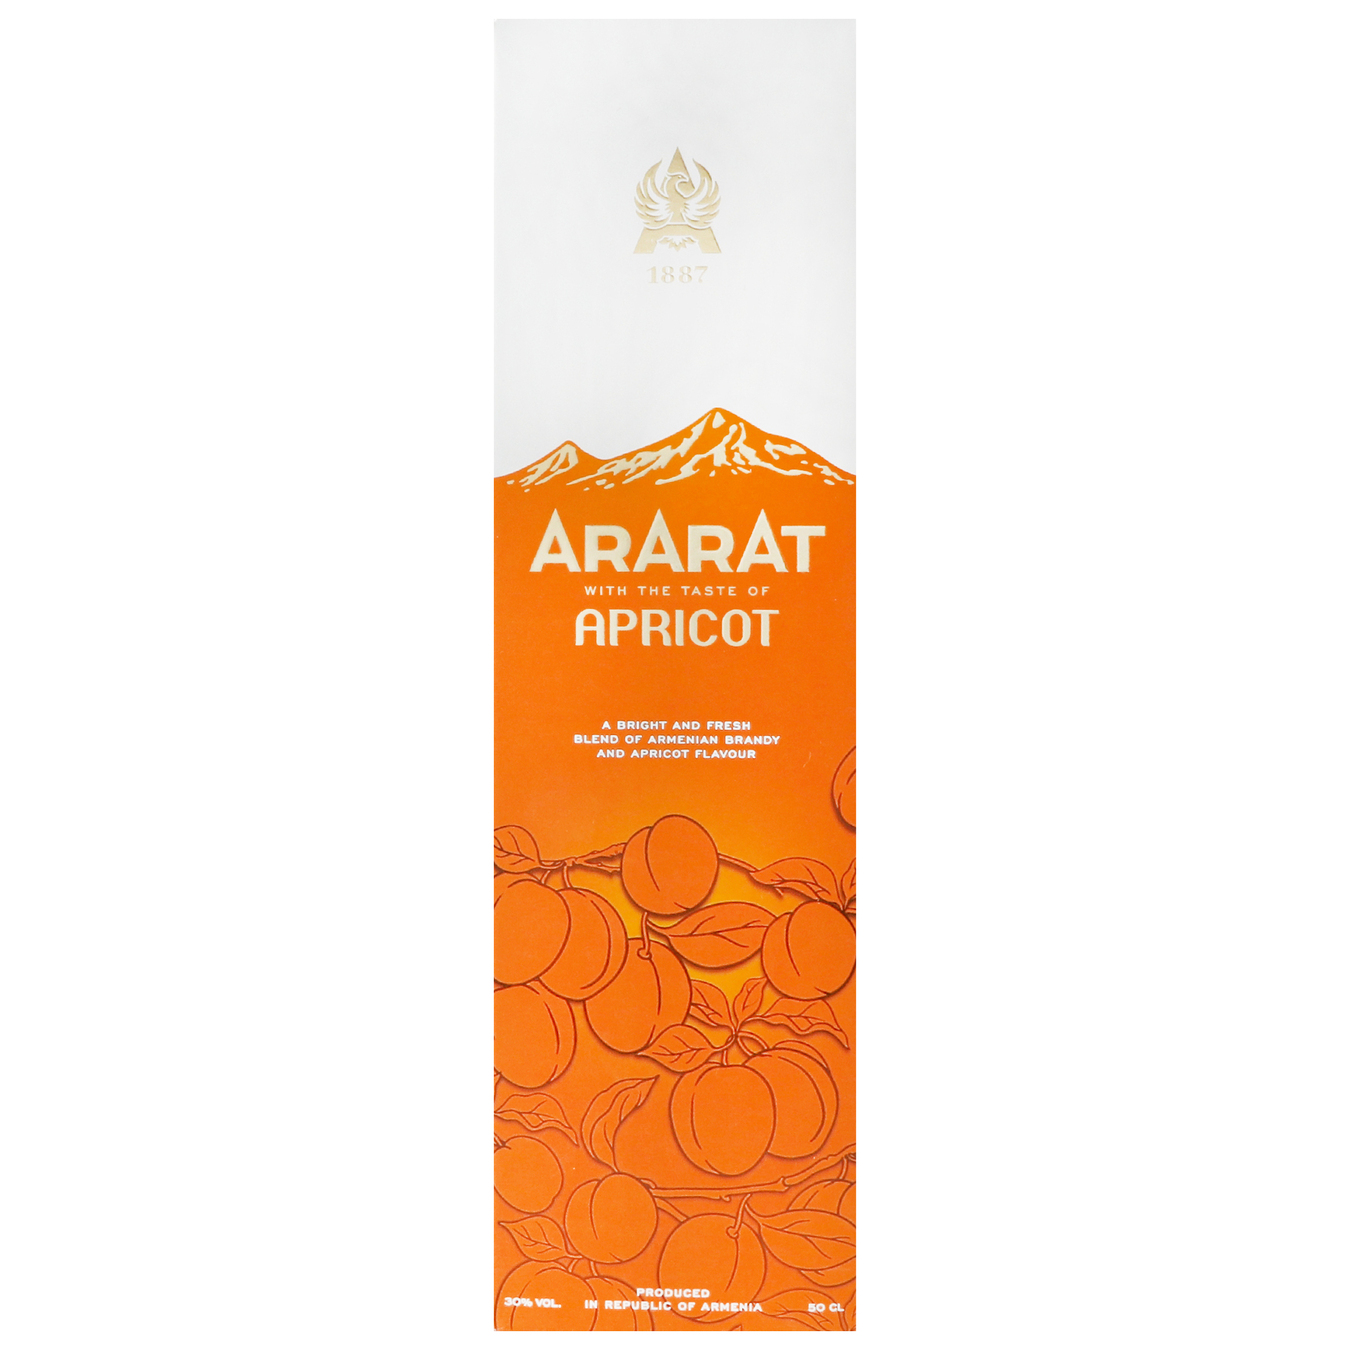 Alcoholic drink Ararat Apricot 30% 0.5 l